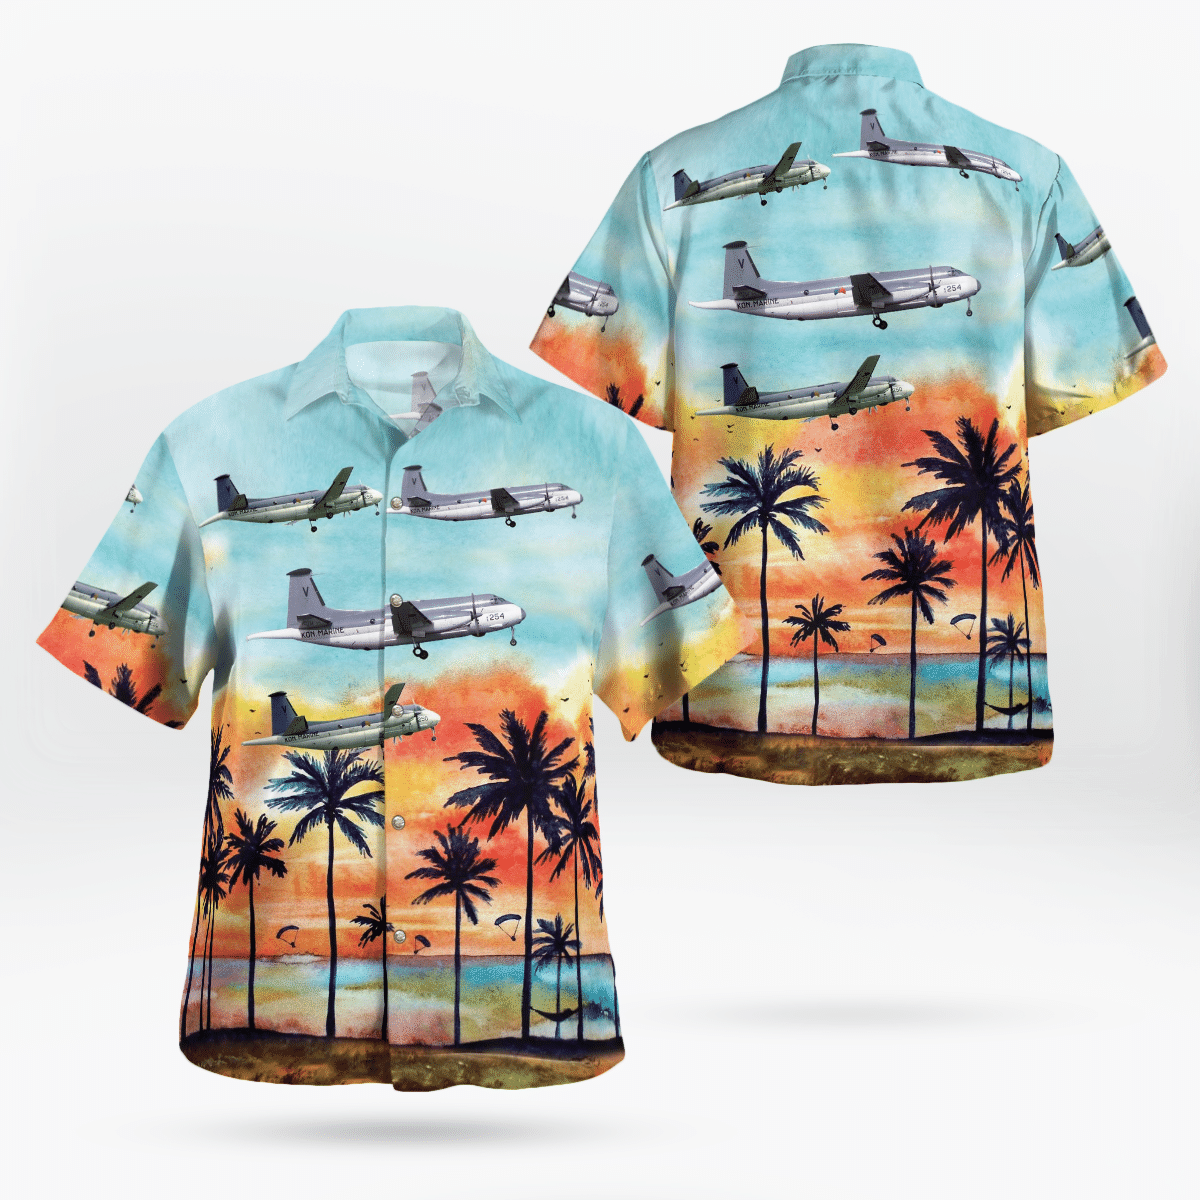 Why don't you order Hot Hawaiian Shirt today? 229